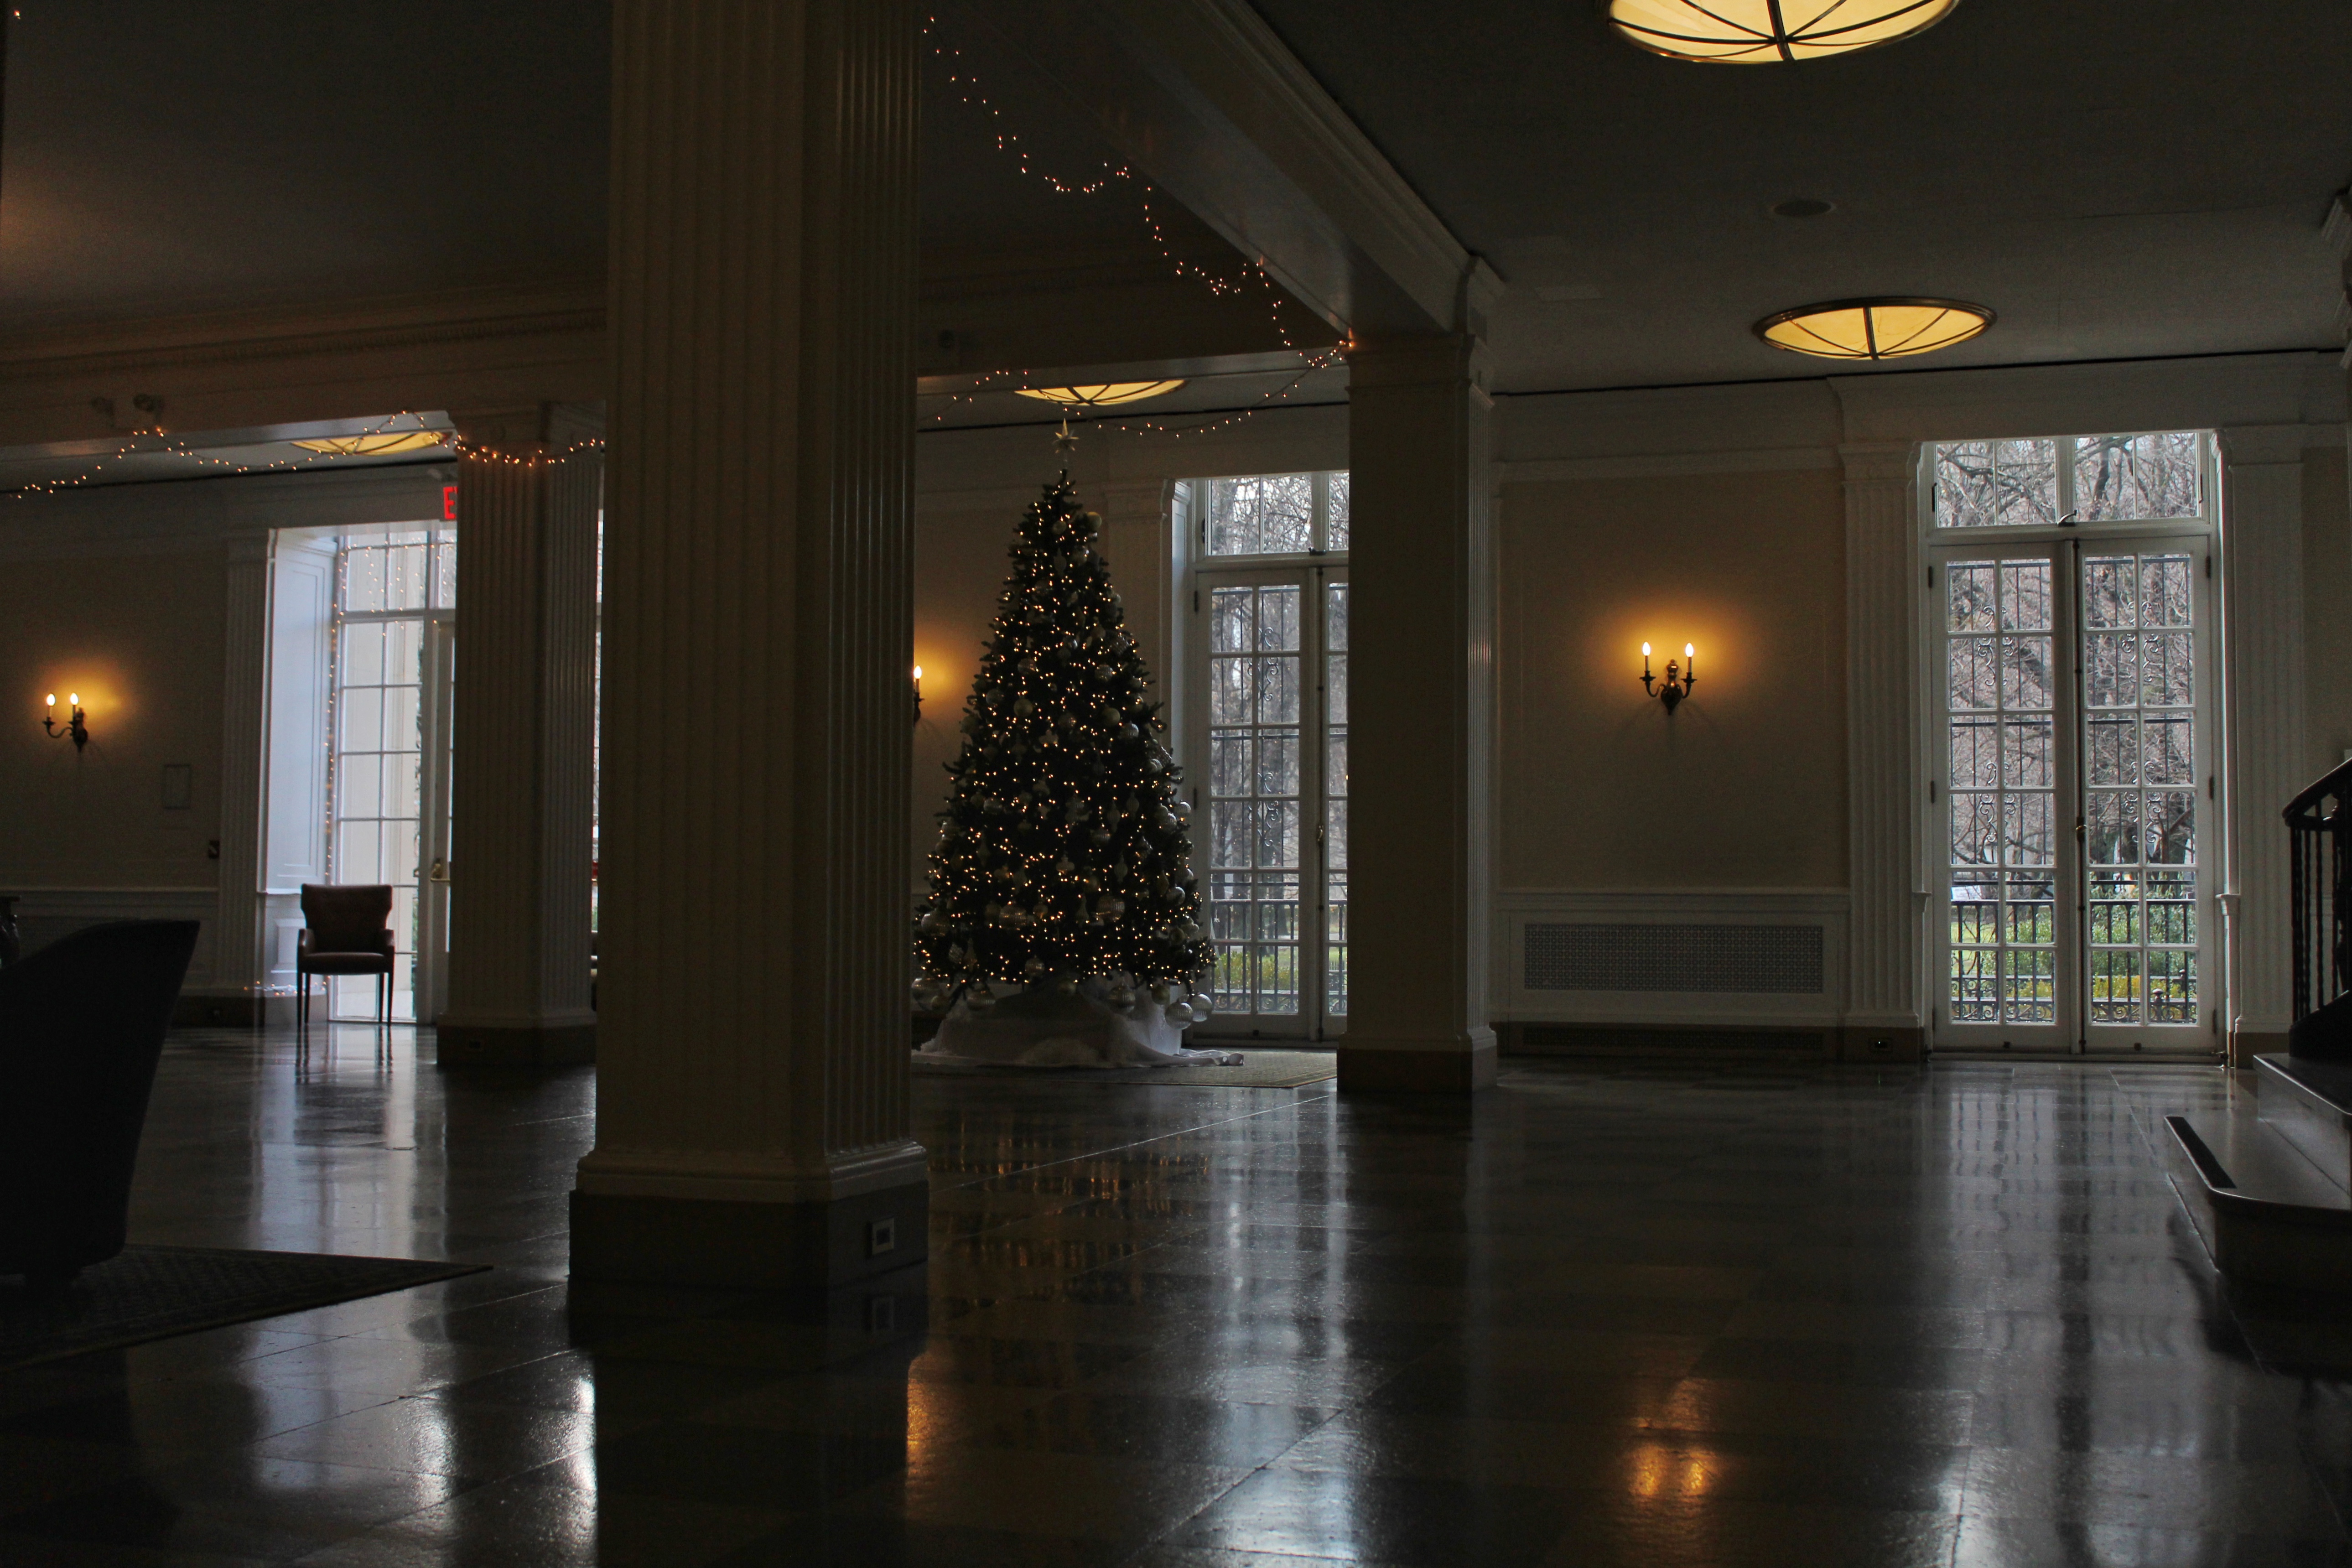 A lone Christmas tree is lit inside a lobby.